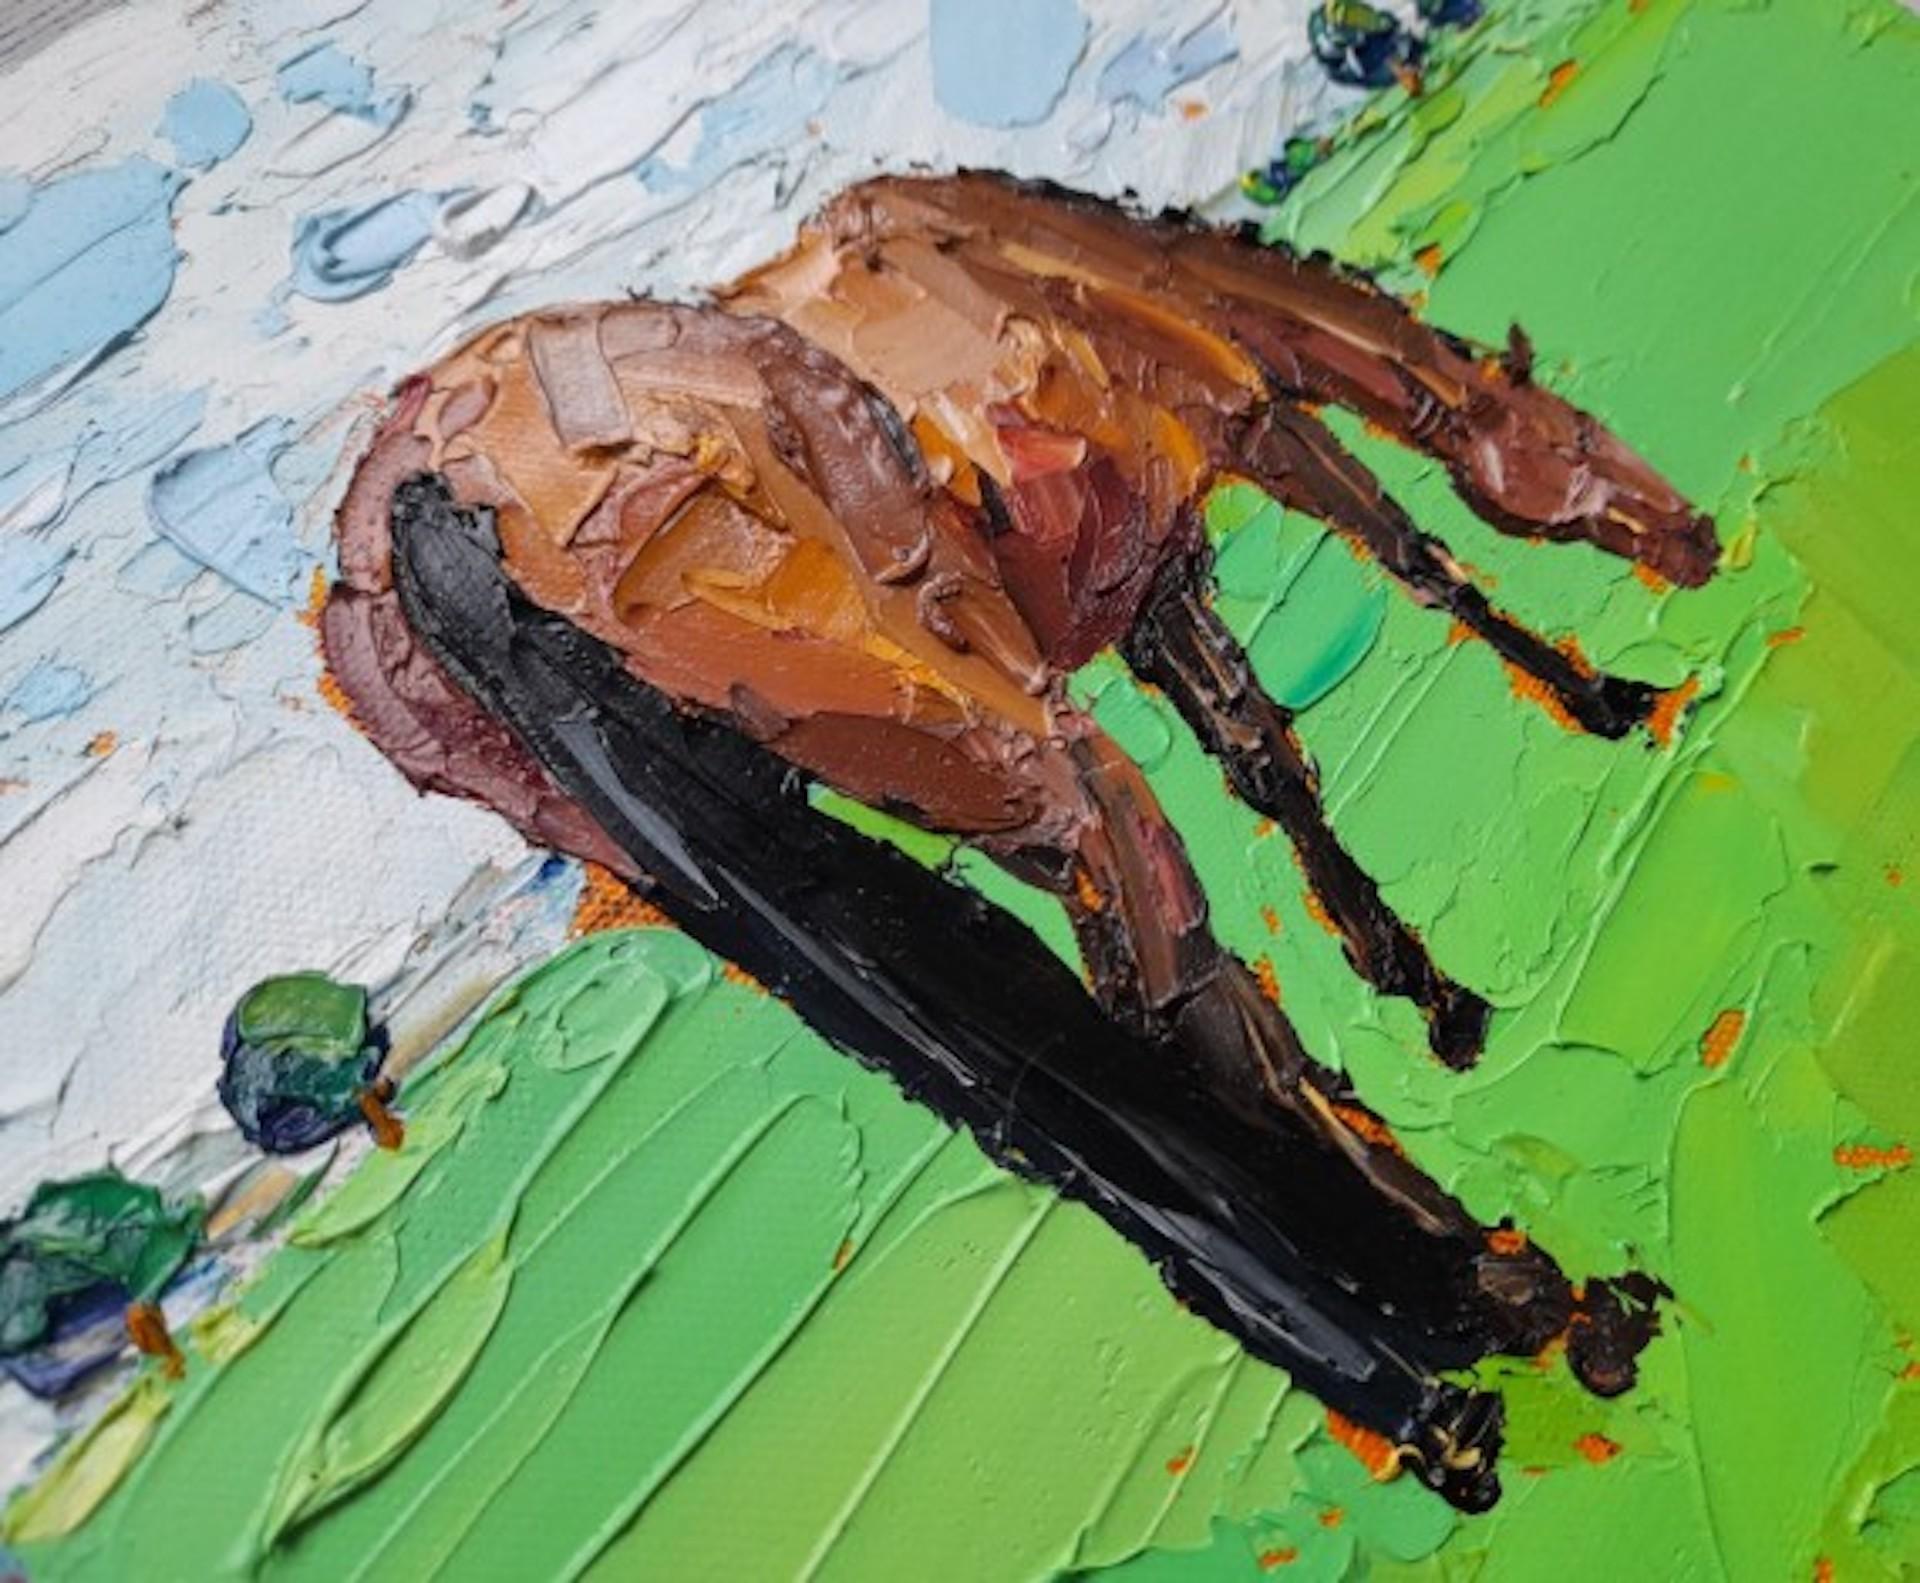 Georgie Dowling, Grazing Horses, Horse Painting, Original Art 1